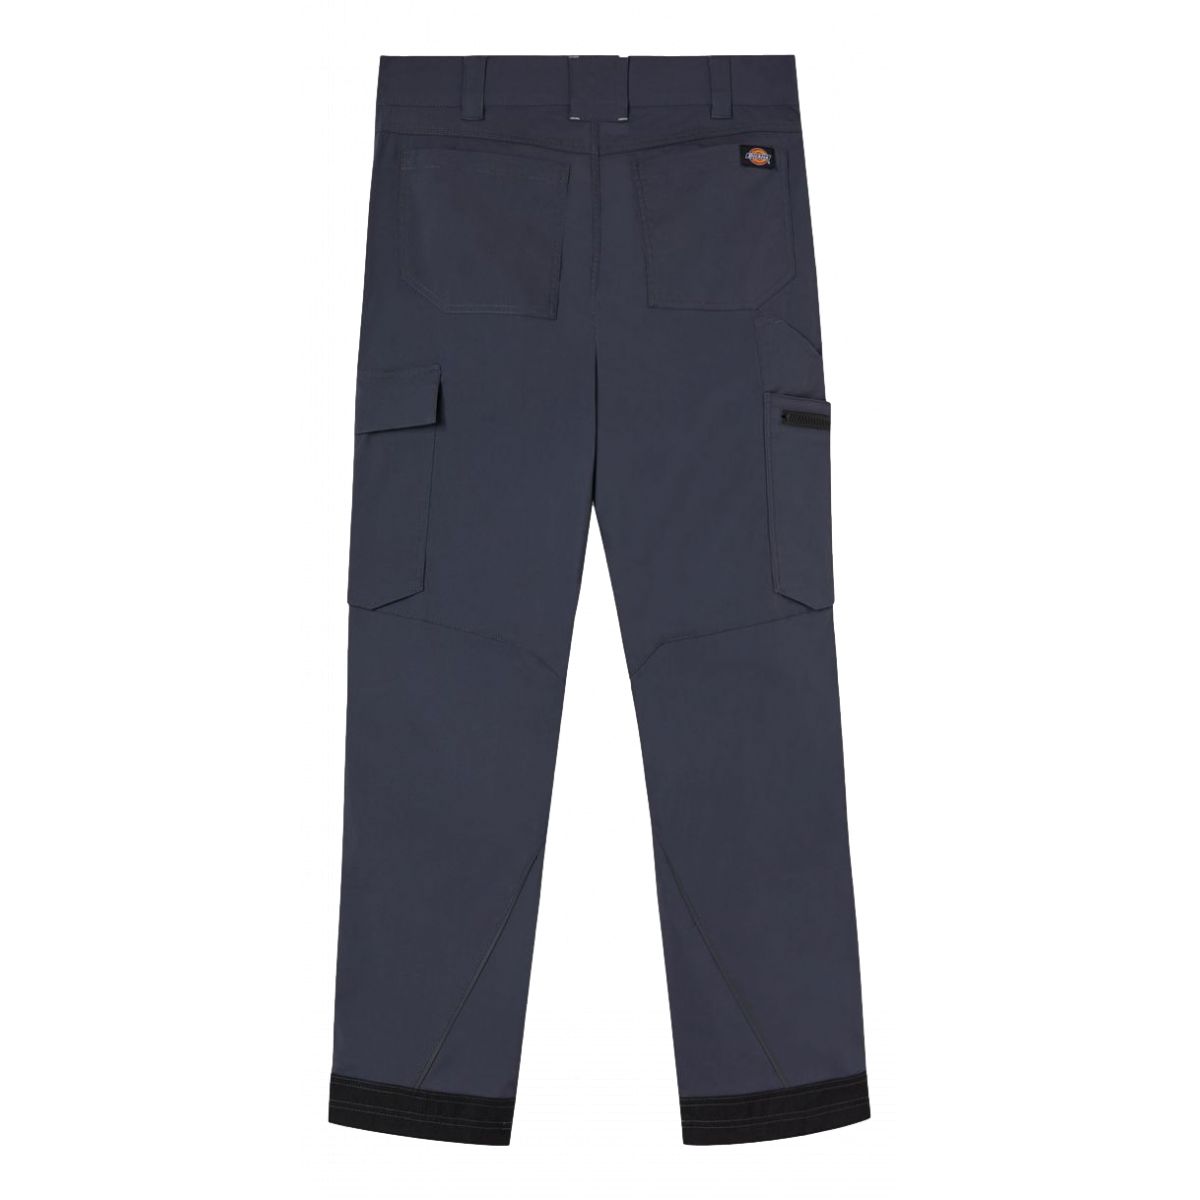 Pantalon léger Flex Gris - Dickies - Taille 54 1